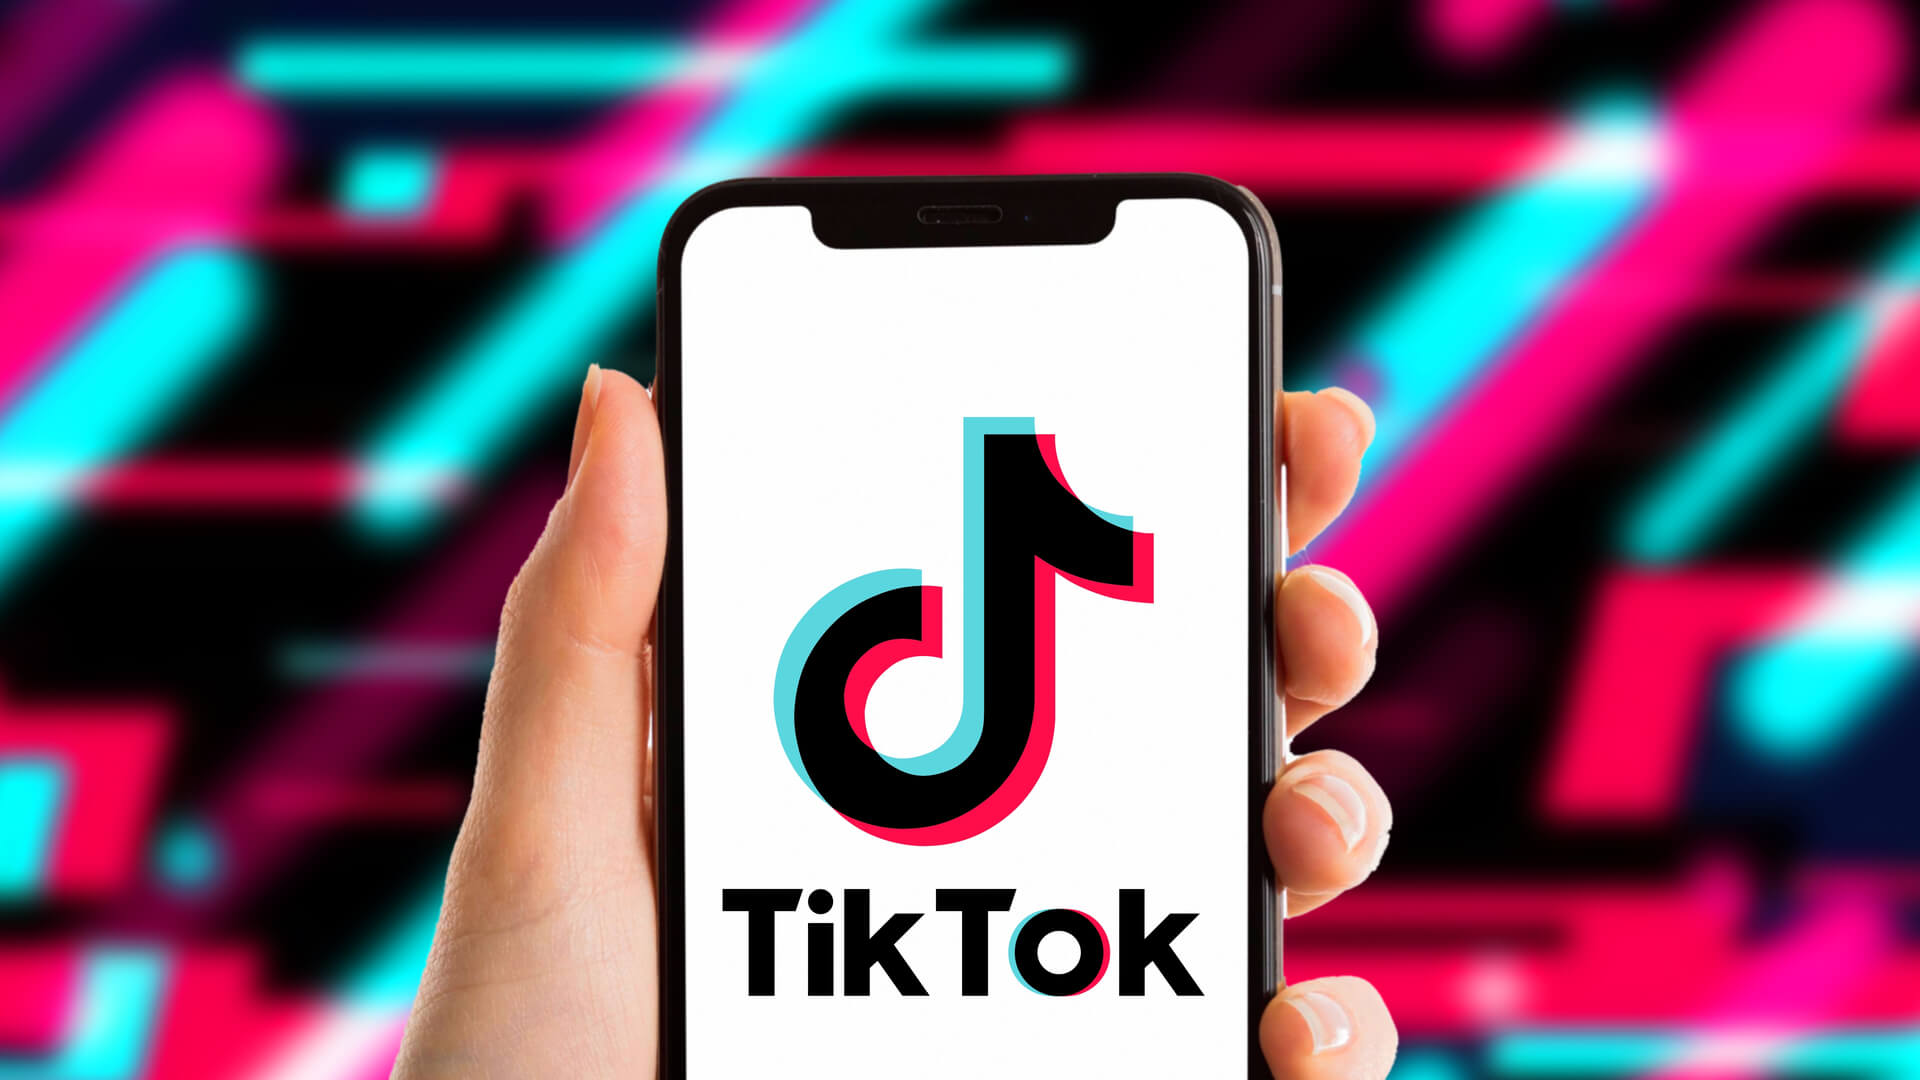 TikTok, App History, Videos, China, & Controversies